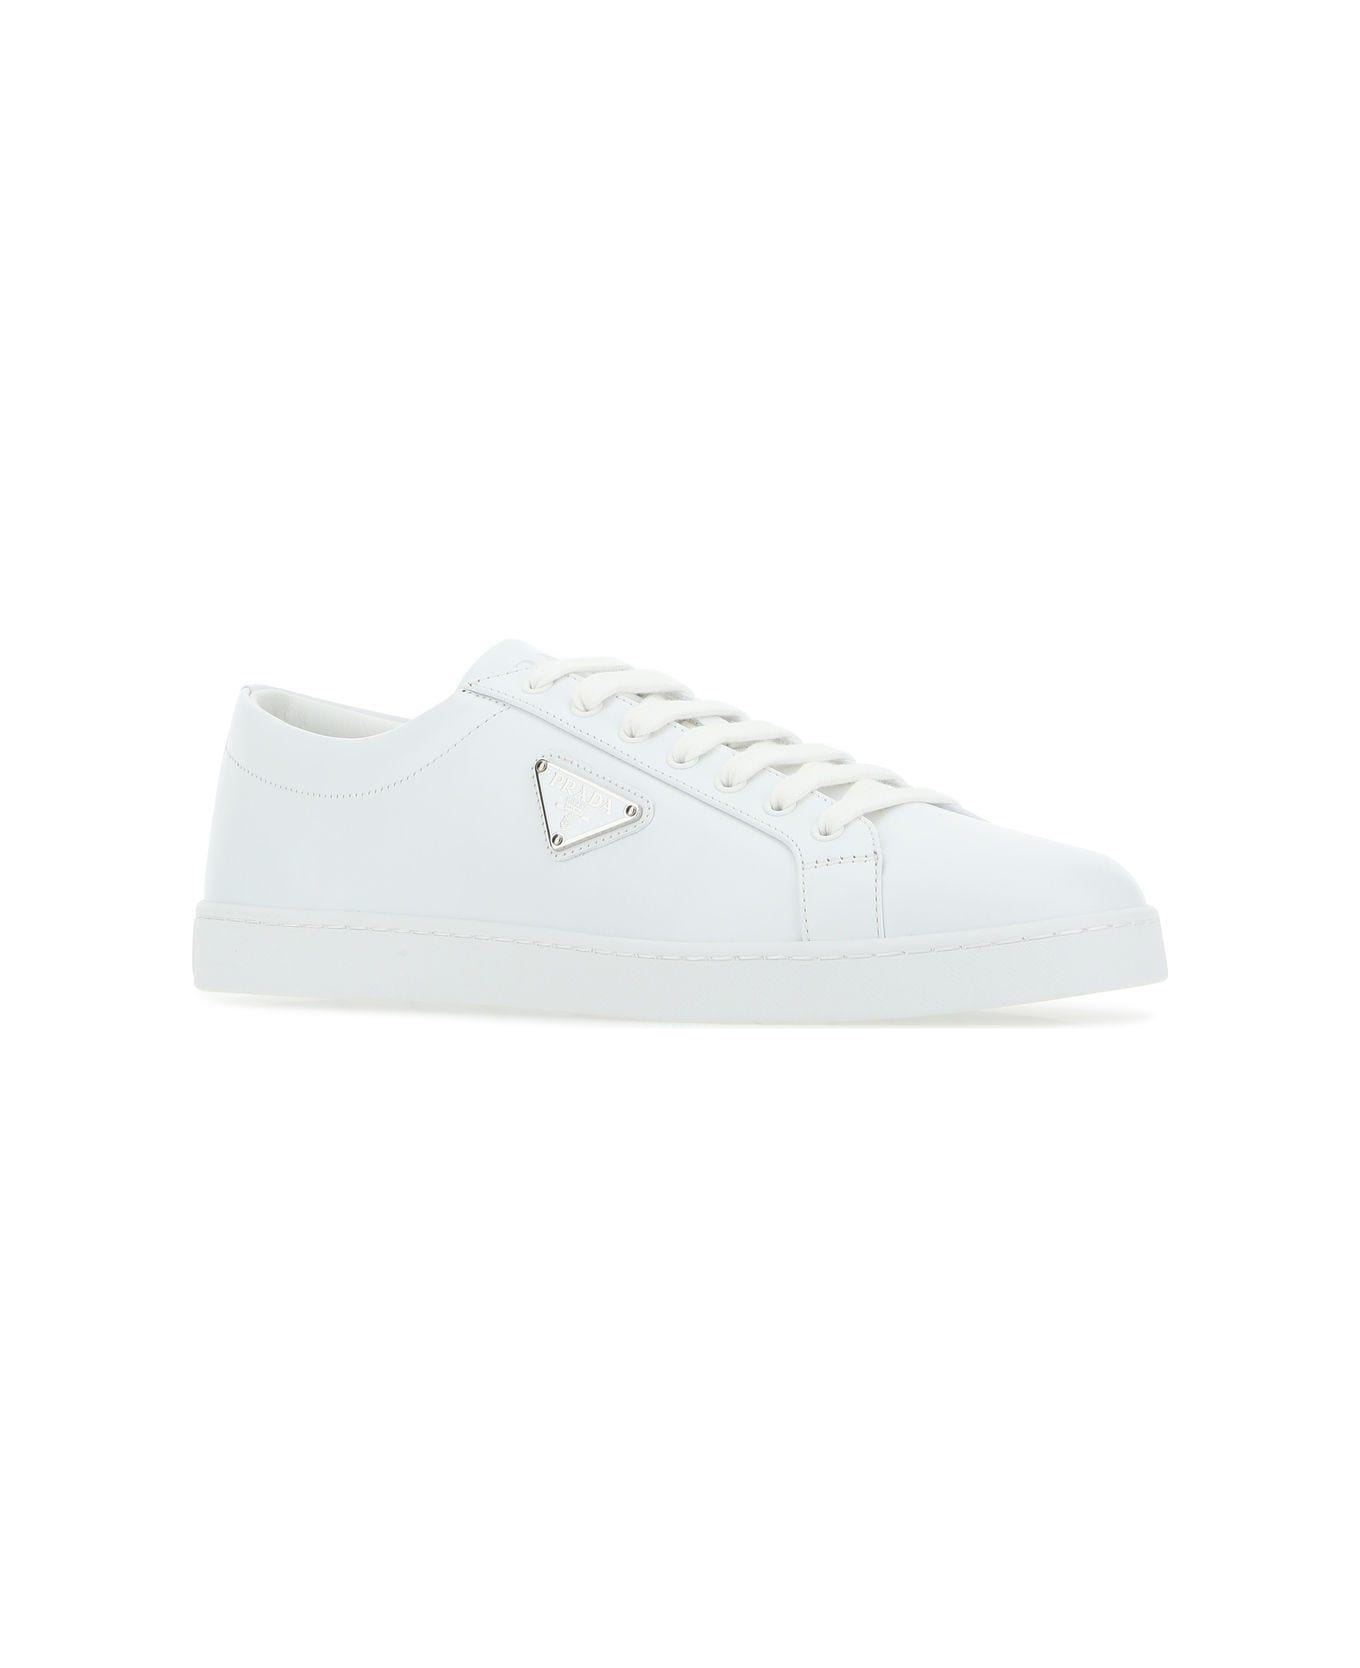 Prada White Leather Sneakers - Bianco